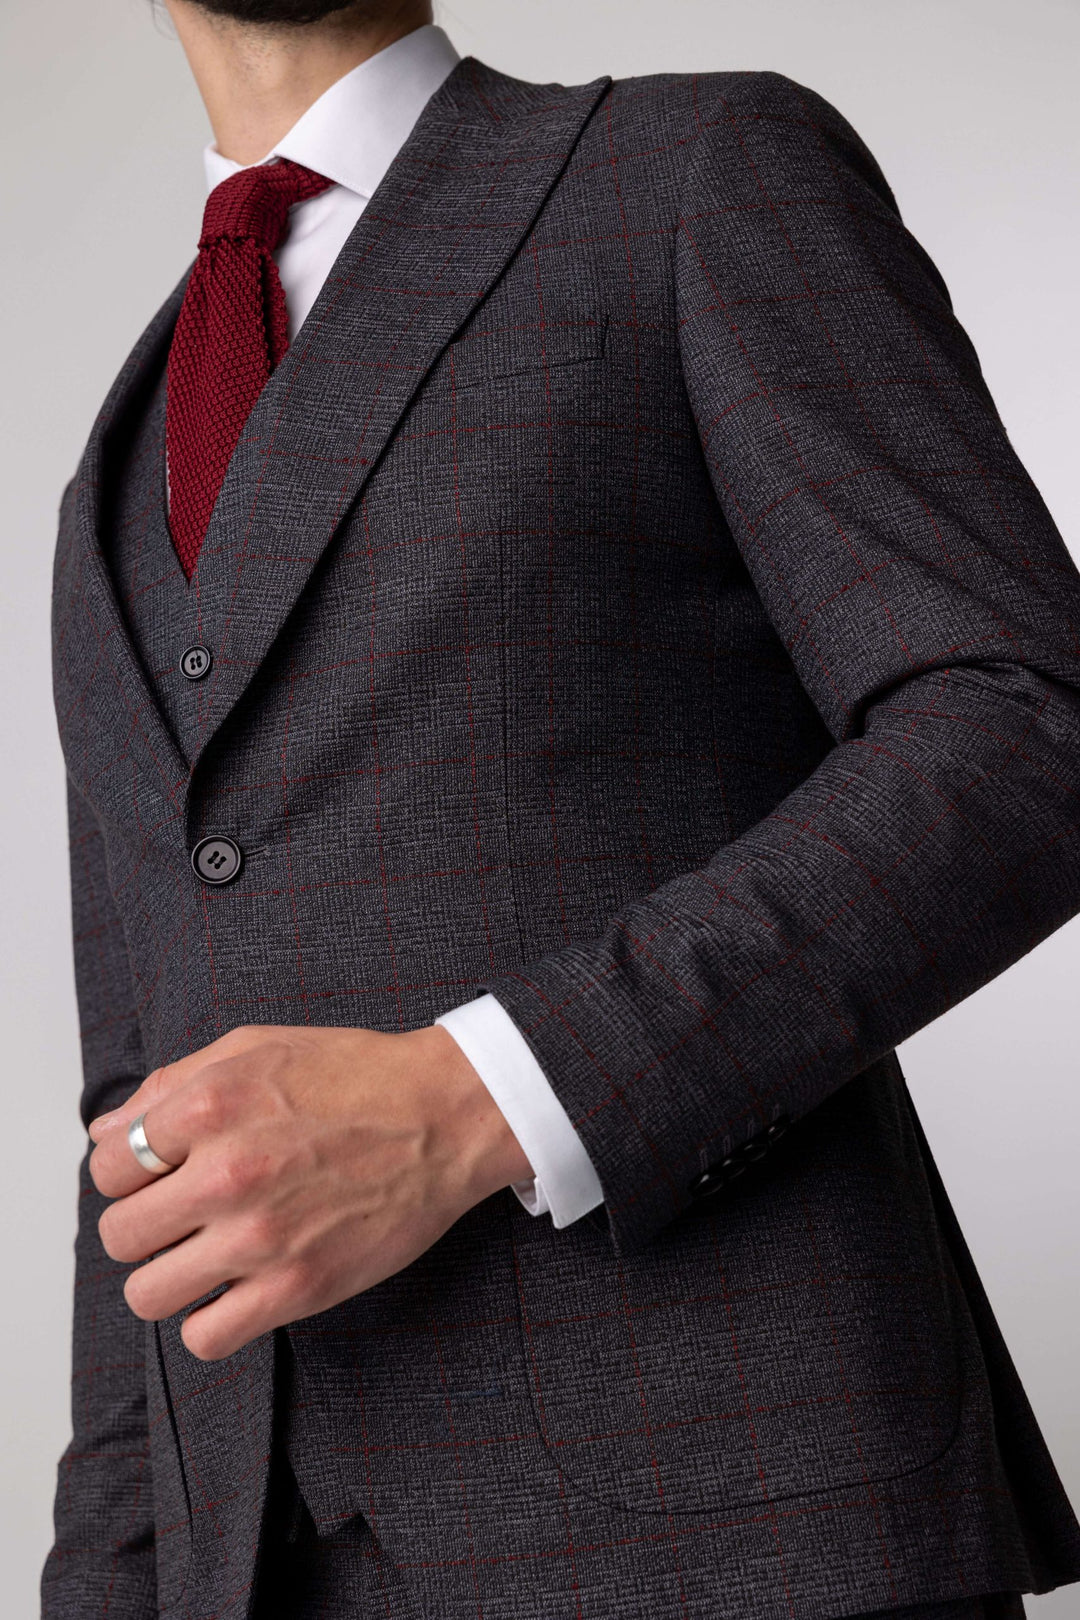 Three-piece gray suit with burgundy checks